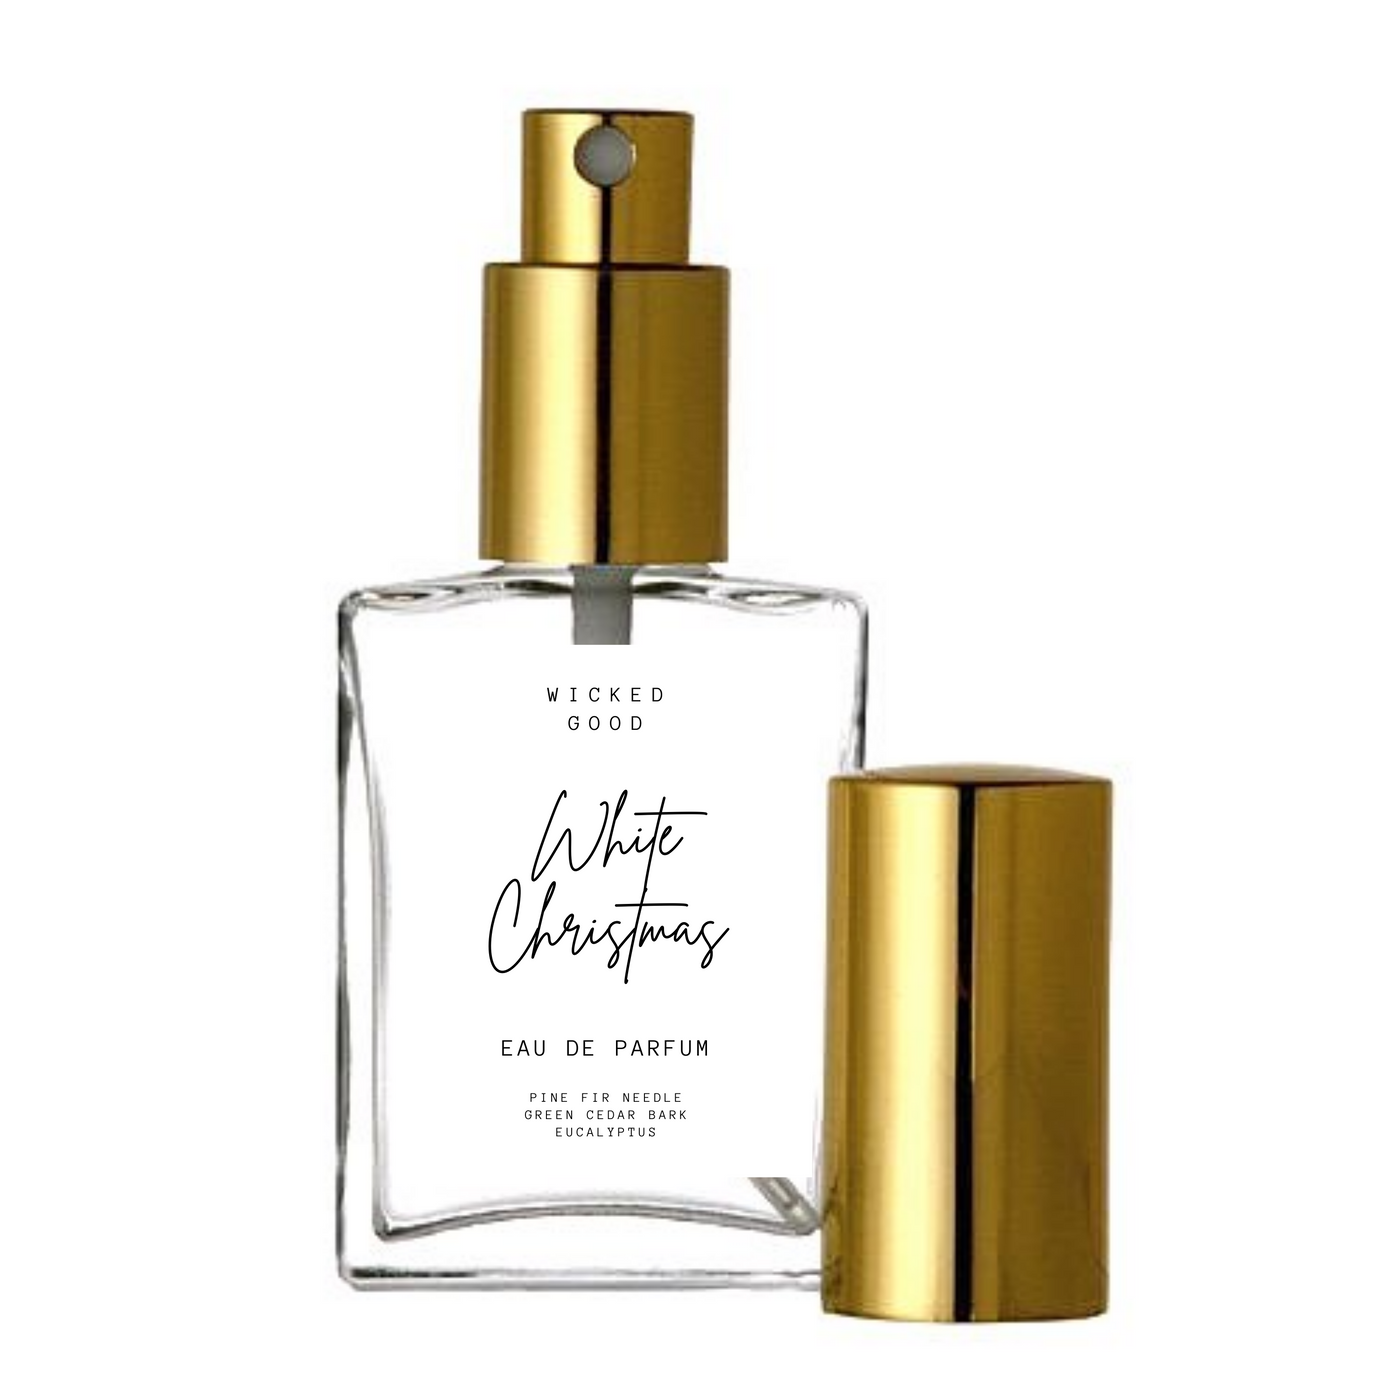 White Christmas Perfume | Pine, Fir, Cedar, Eucalyptus - Fresh Scent